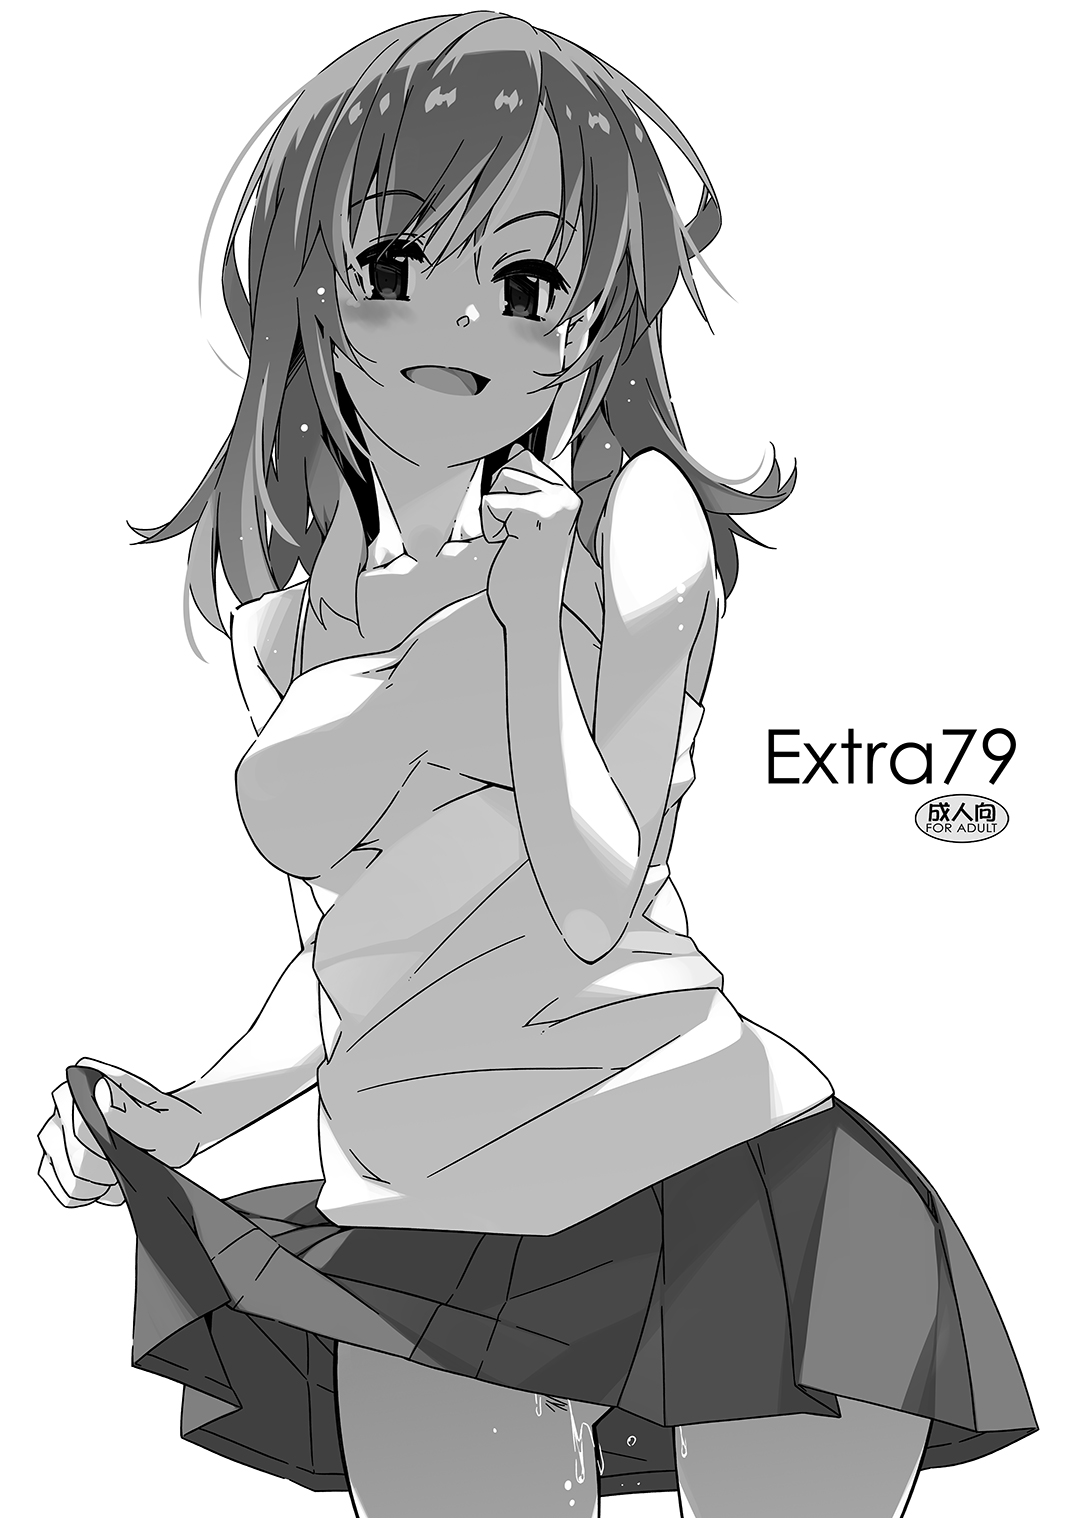 Extra79